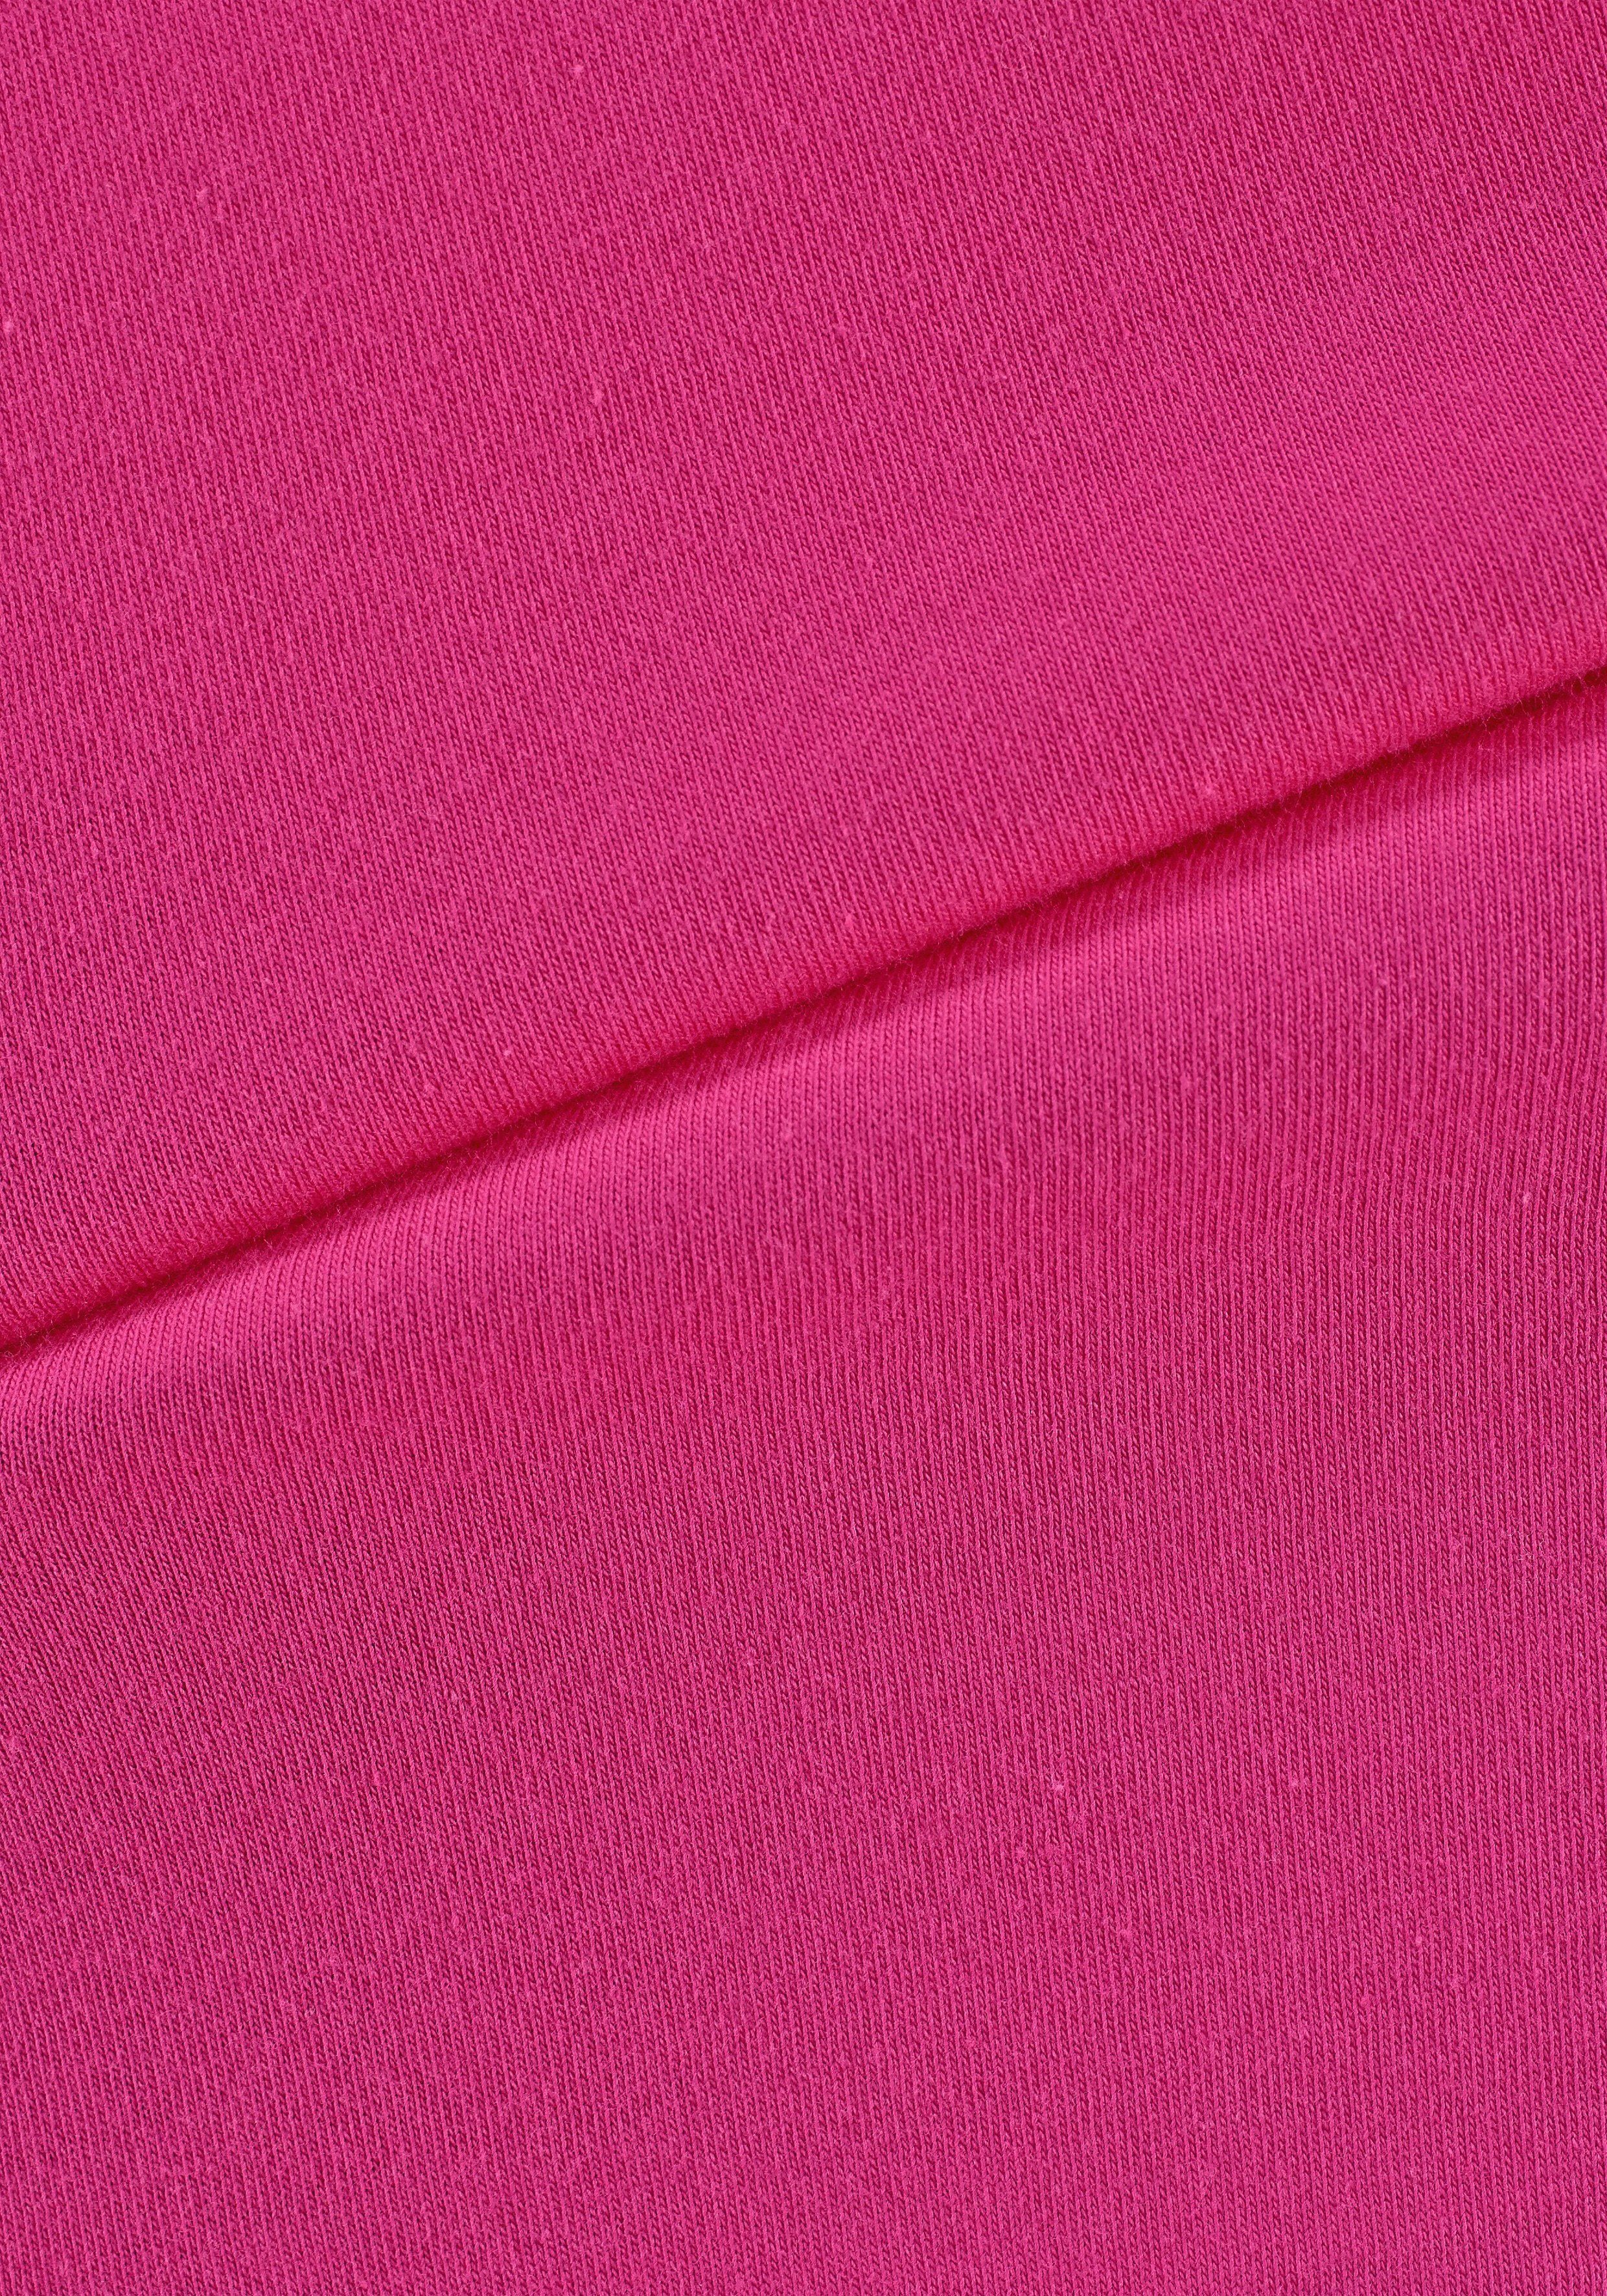 Vivance Dreams Spitzenoptik schwarz pink, in (2er-Pack) Print mit Sleepshirt